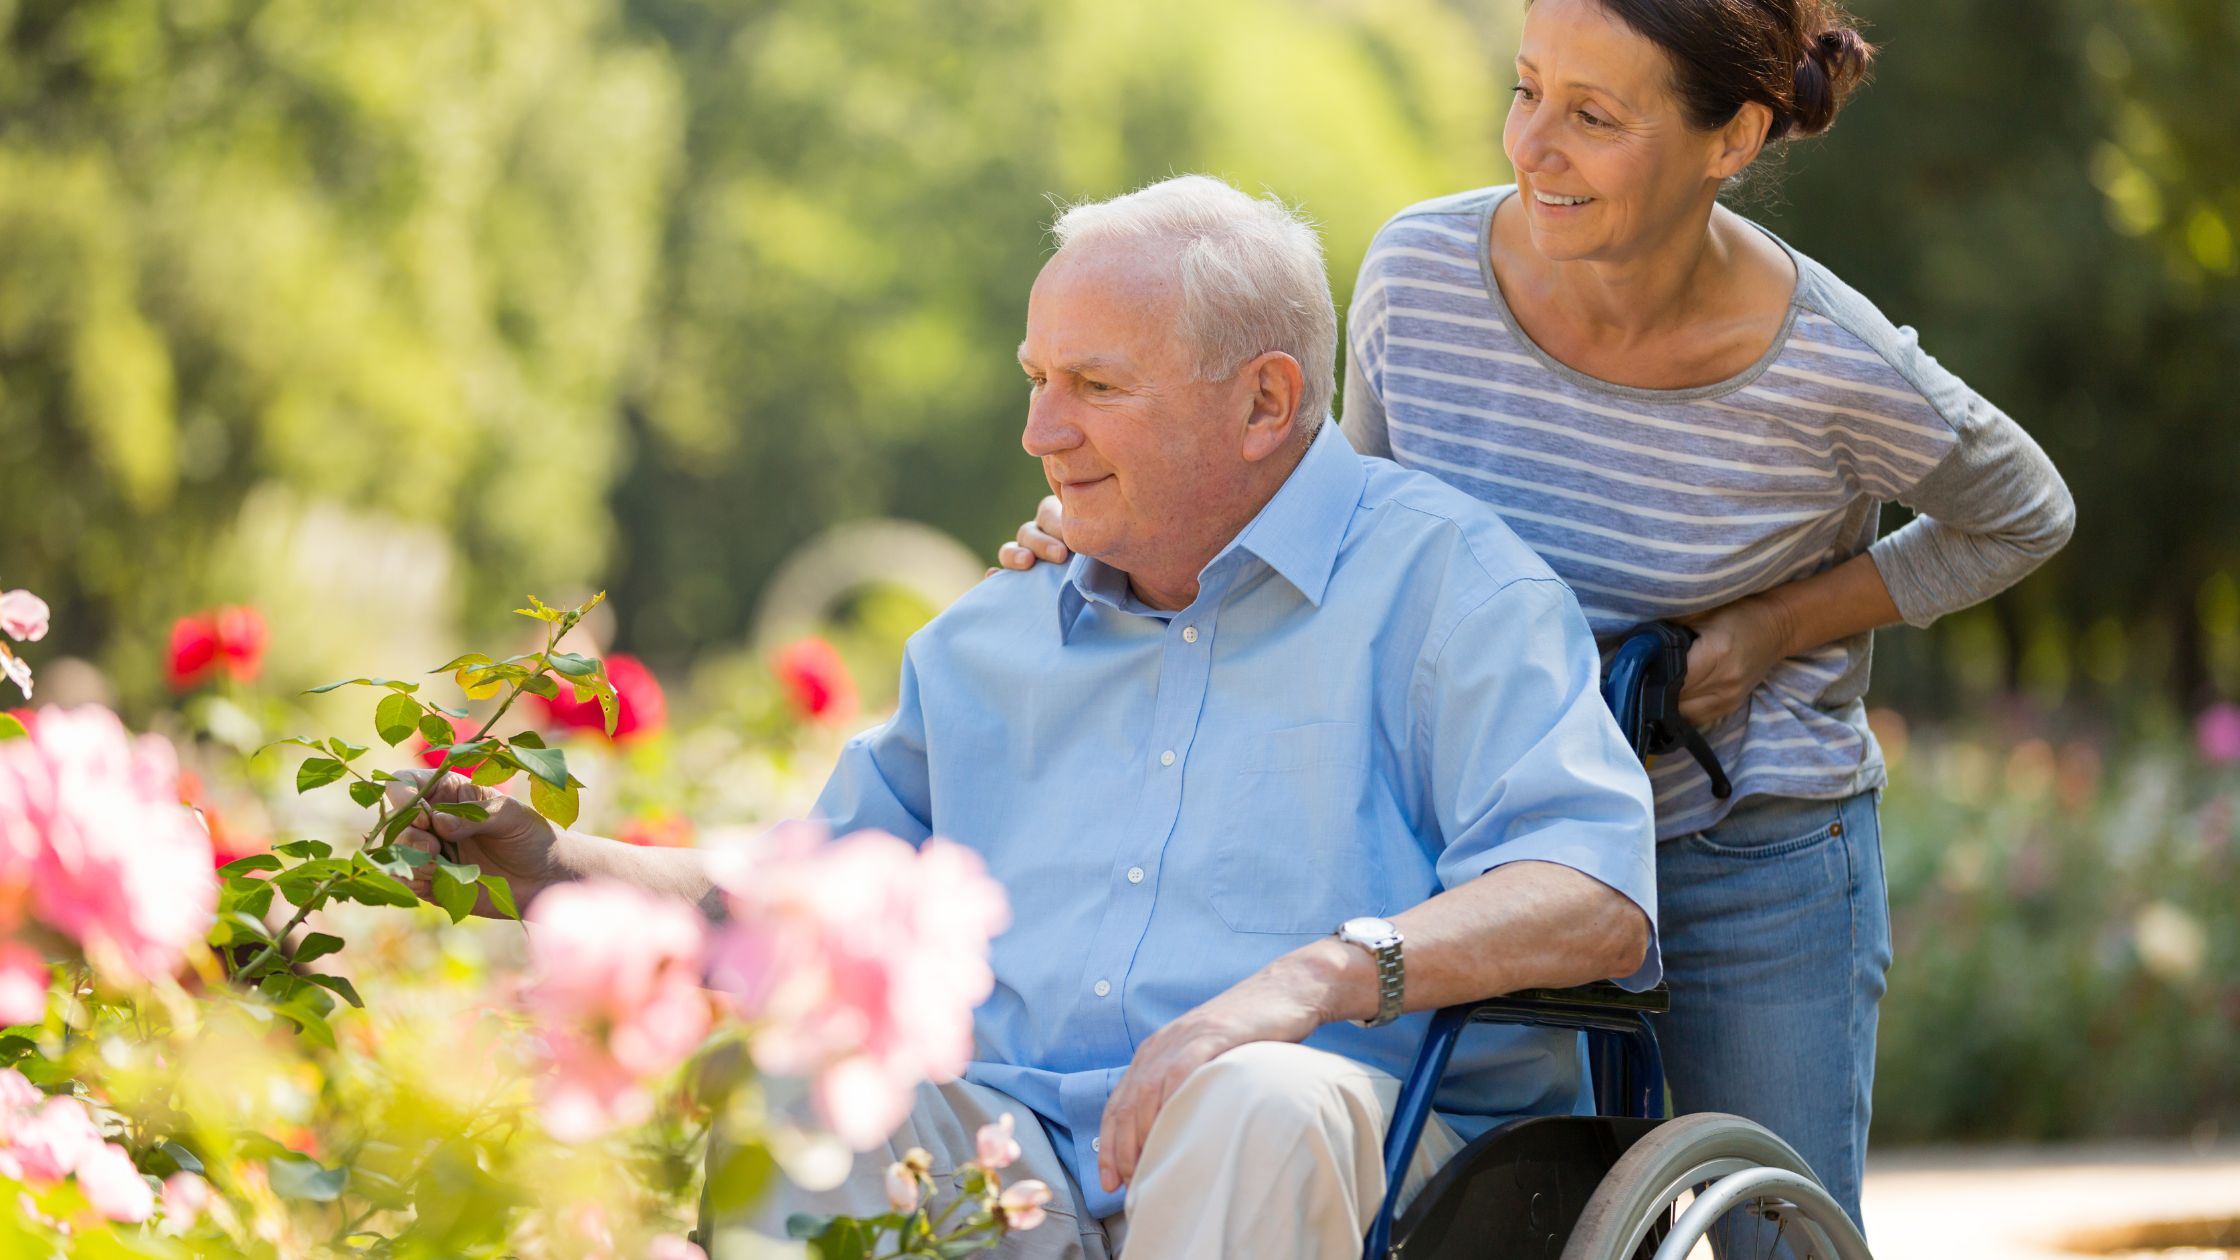 understanding assisted living